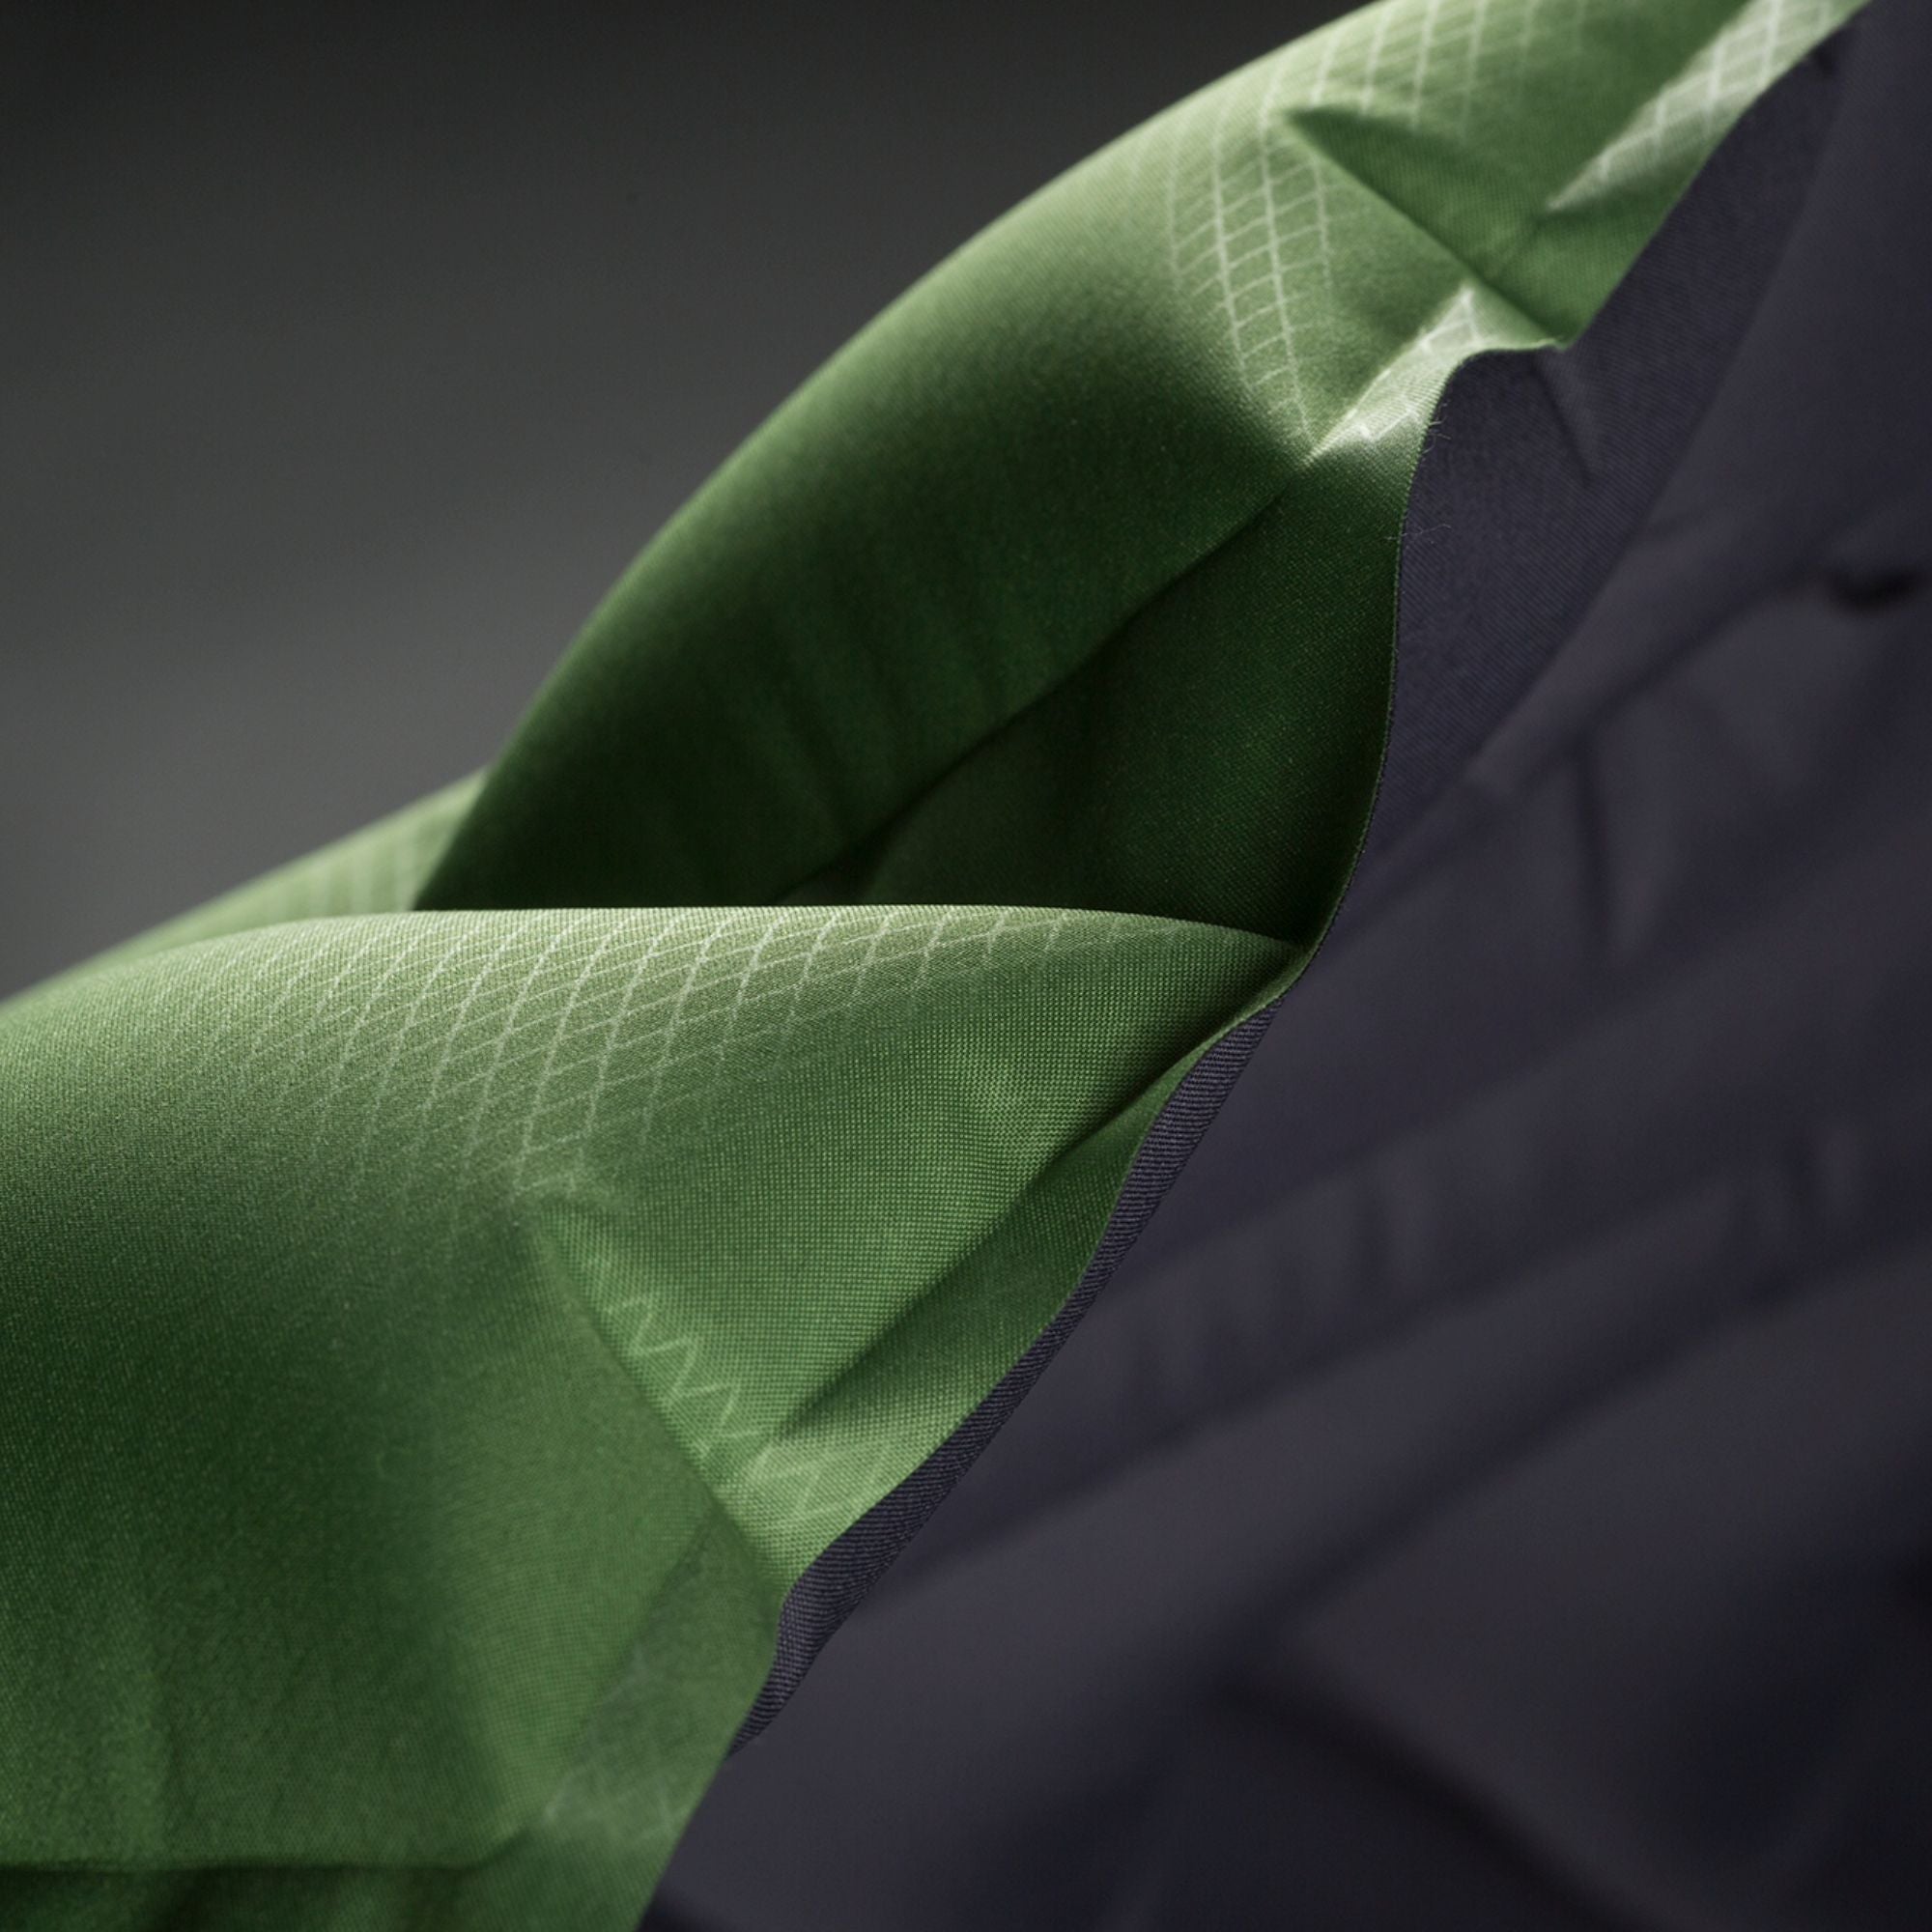 Static V Sleeping Pad, Green, Up Close Fabric